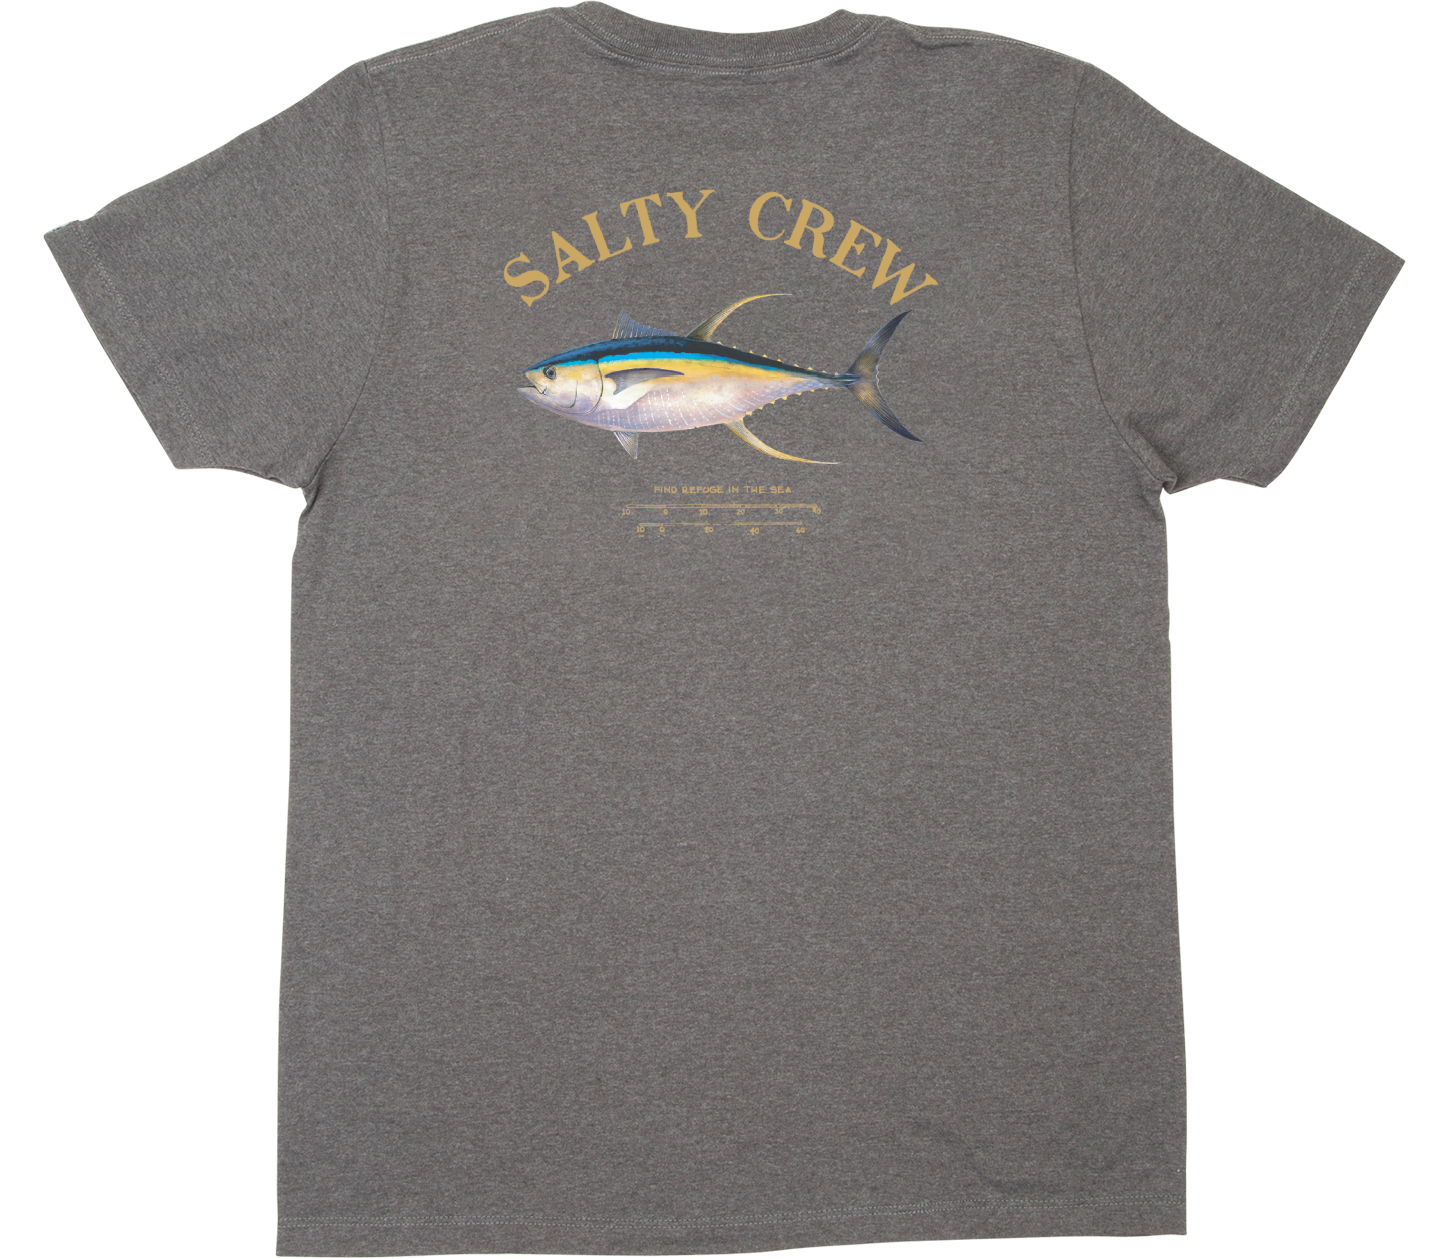 Salty Crew - Ahi Mount Short Sleeve Standard Tee